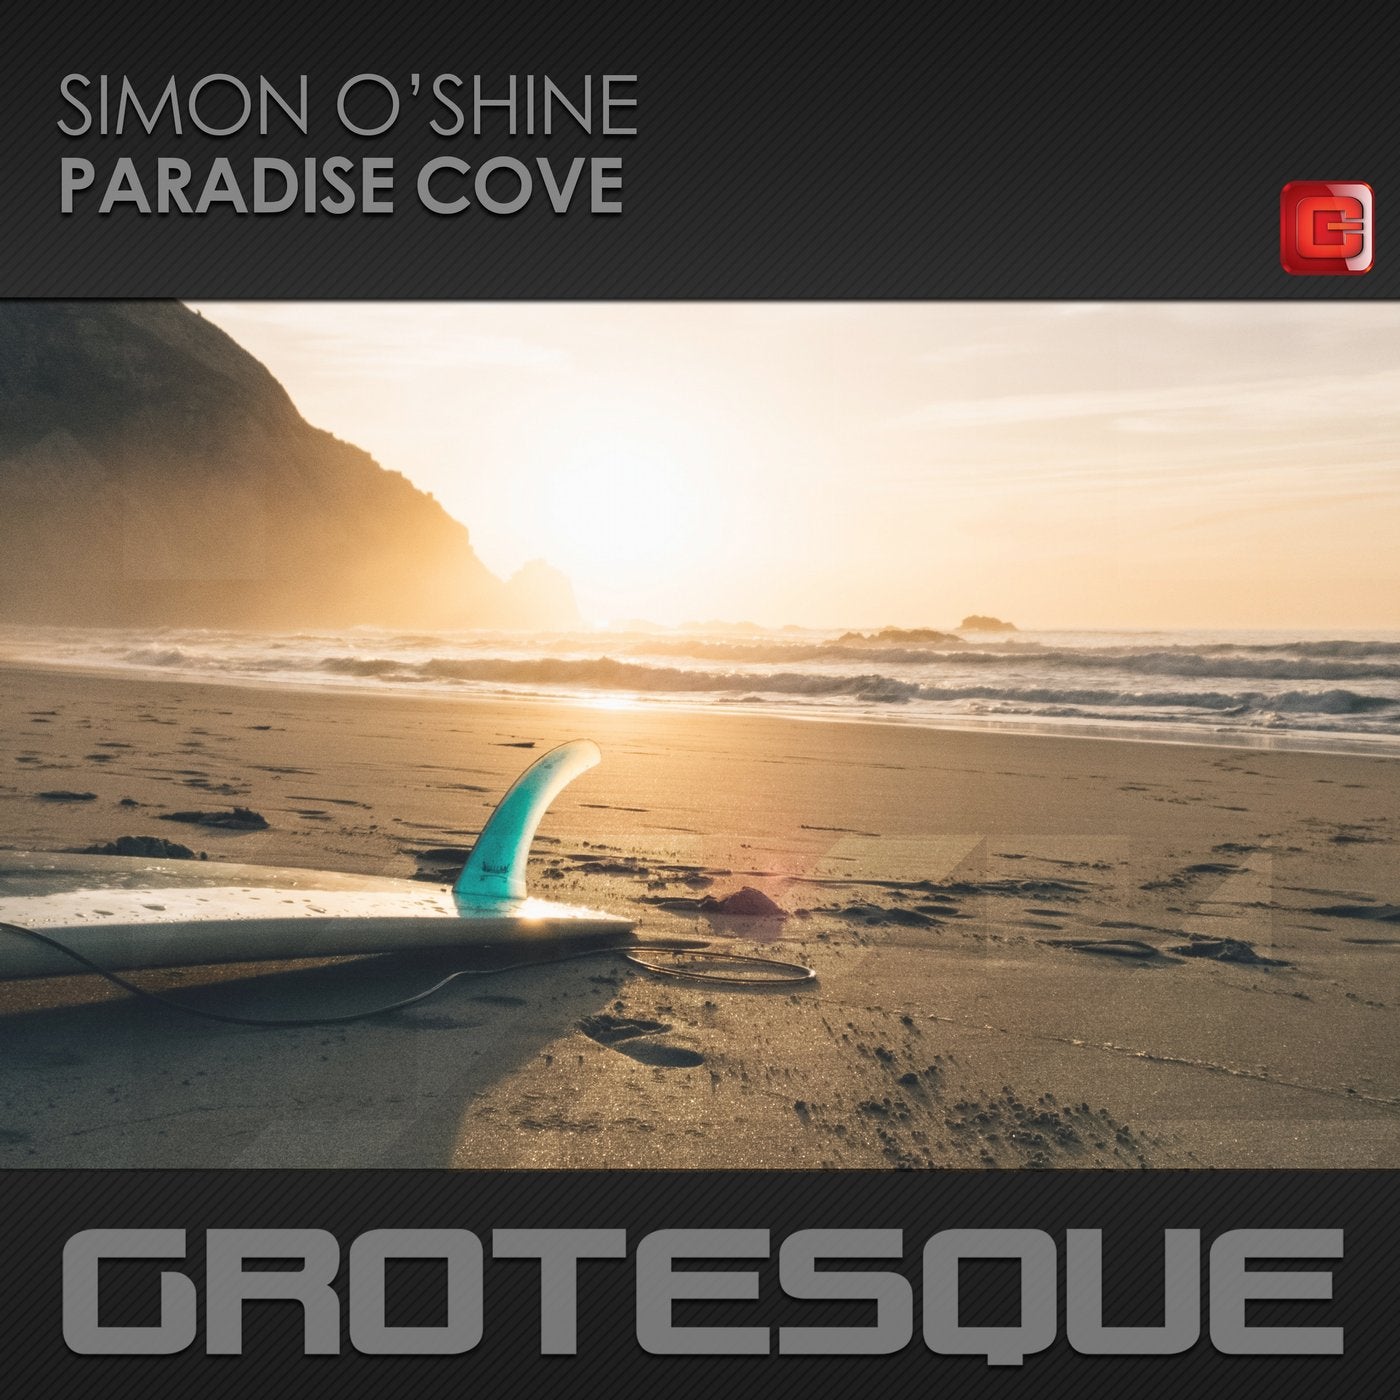 Simon O'Shine Music & Downloads on Beatport